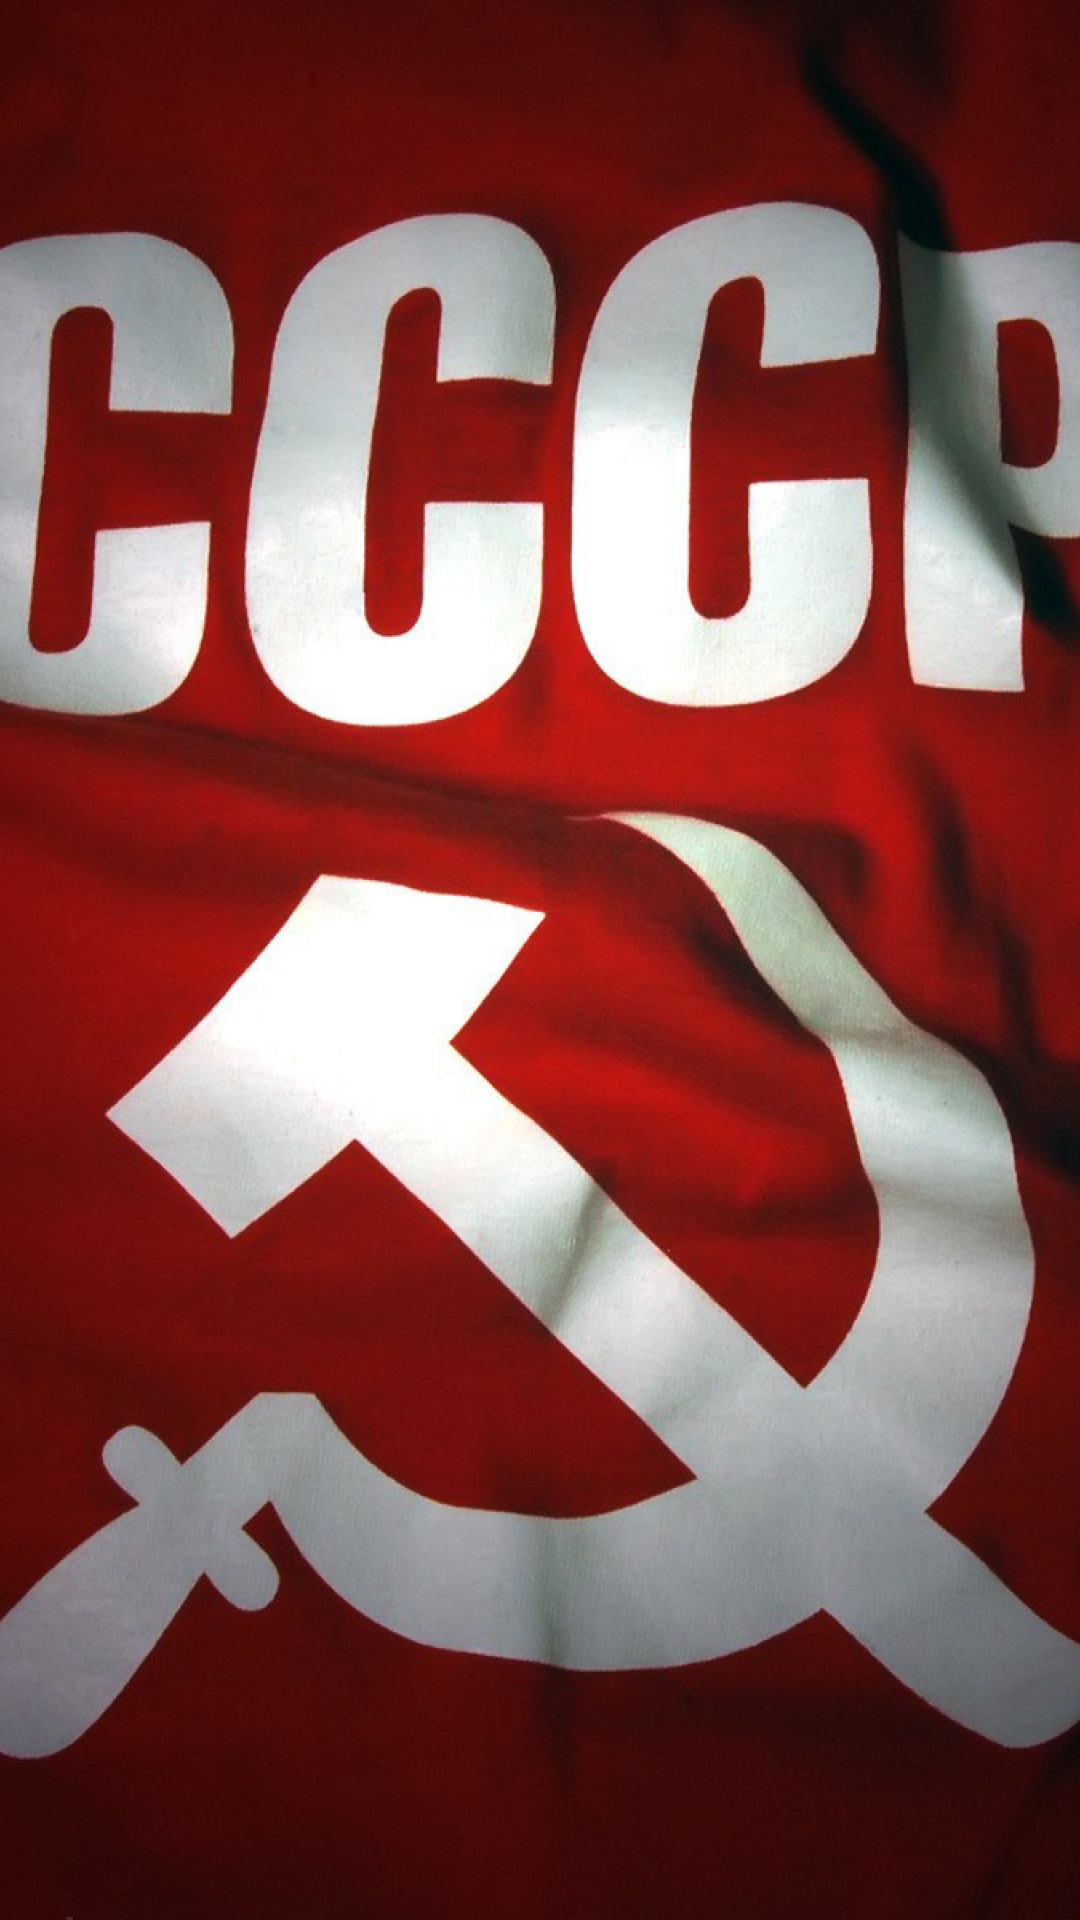 USSR Flag wallpaper 1080x1920